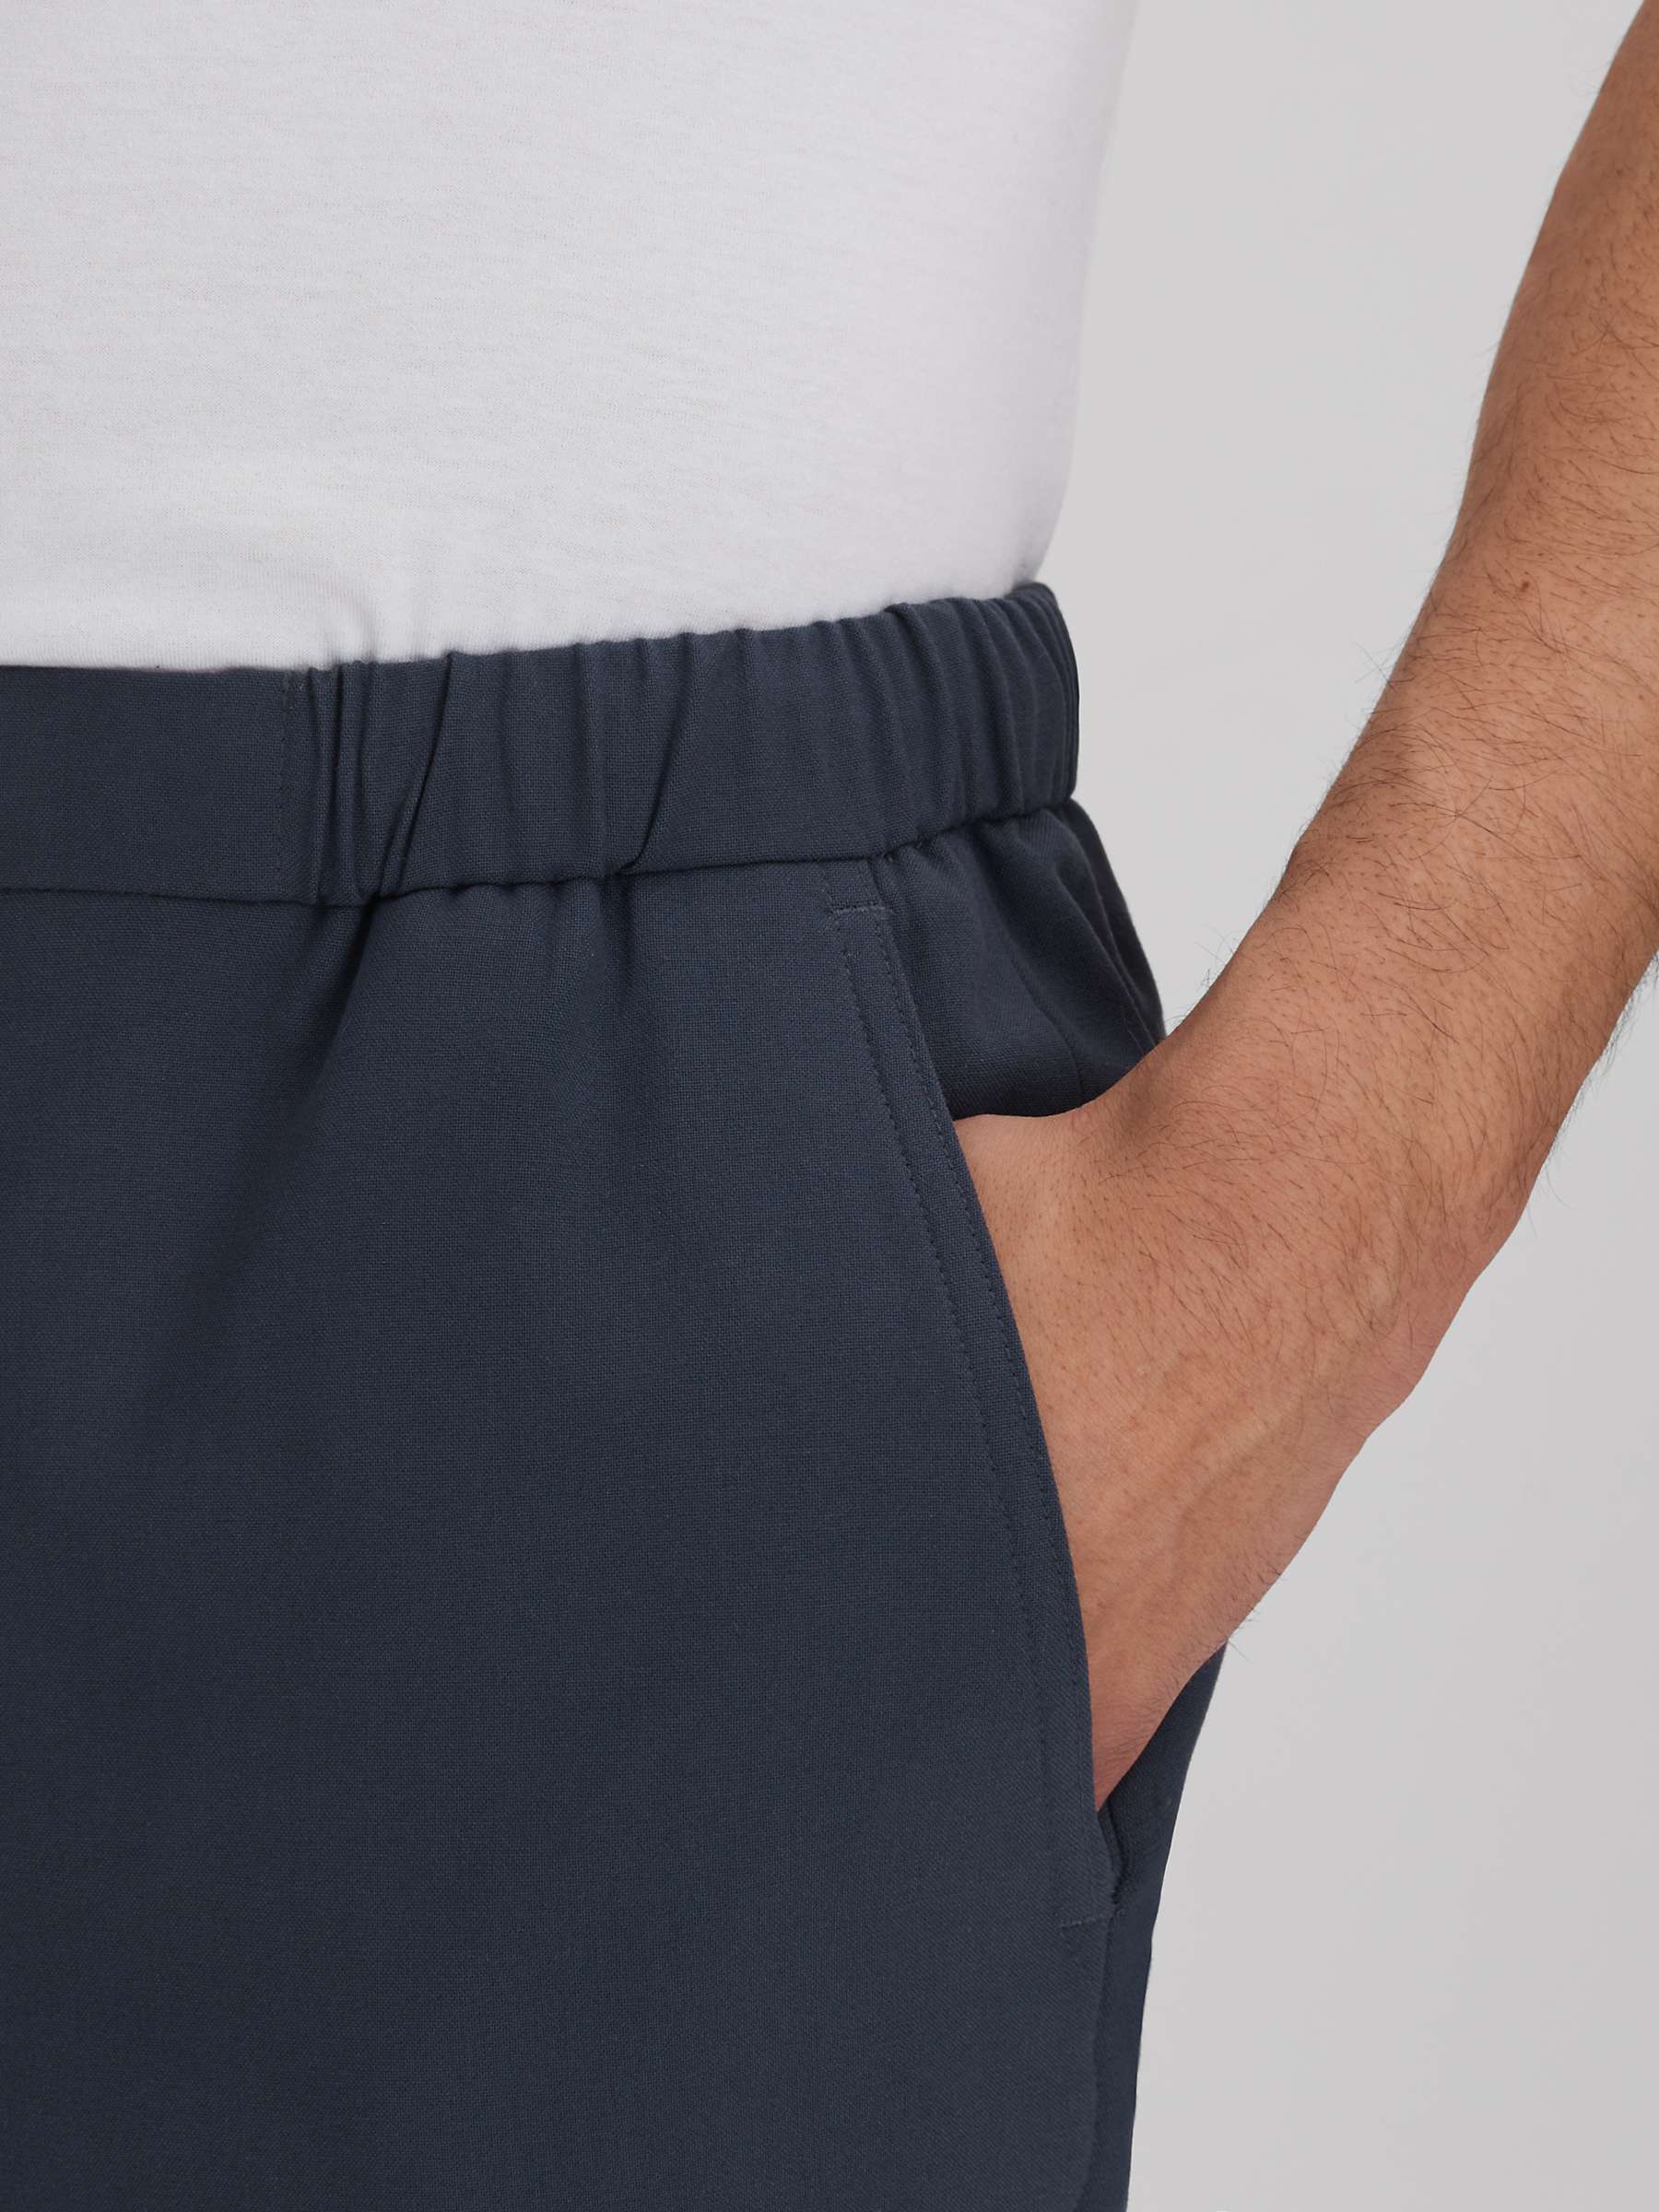 Buy Reiss Deck Drawcord Slim Fit Shorts Online at johnlewis.com